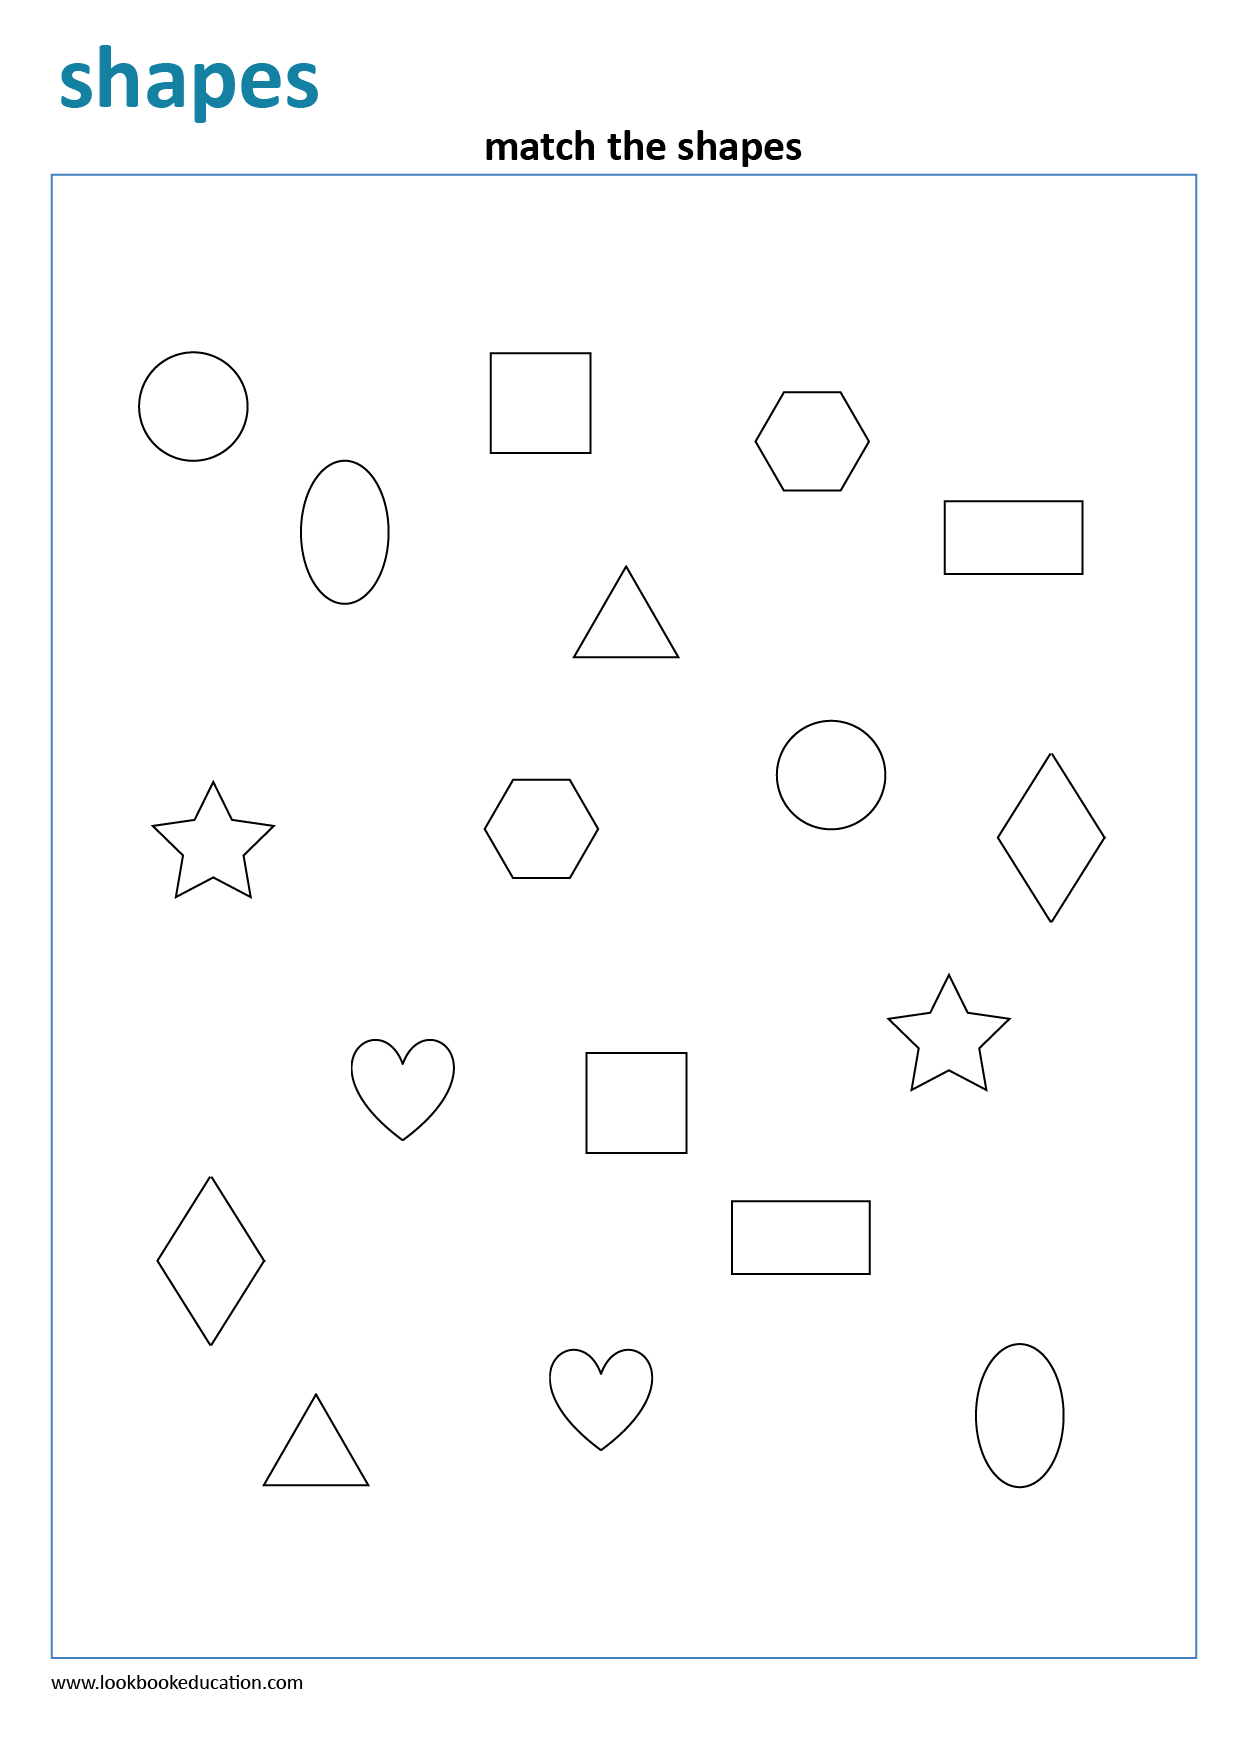 free-printable-matching-shapes-worksheets-printable-blank-world